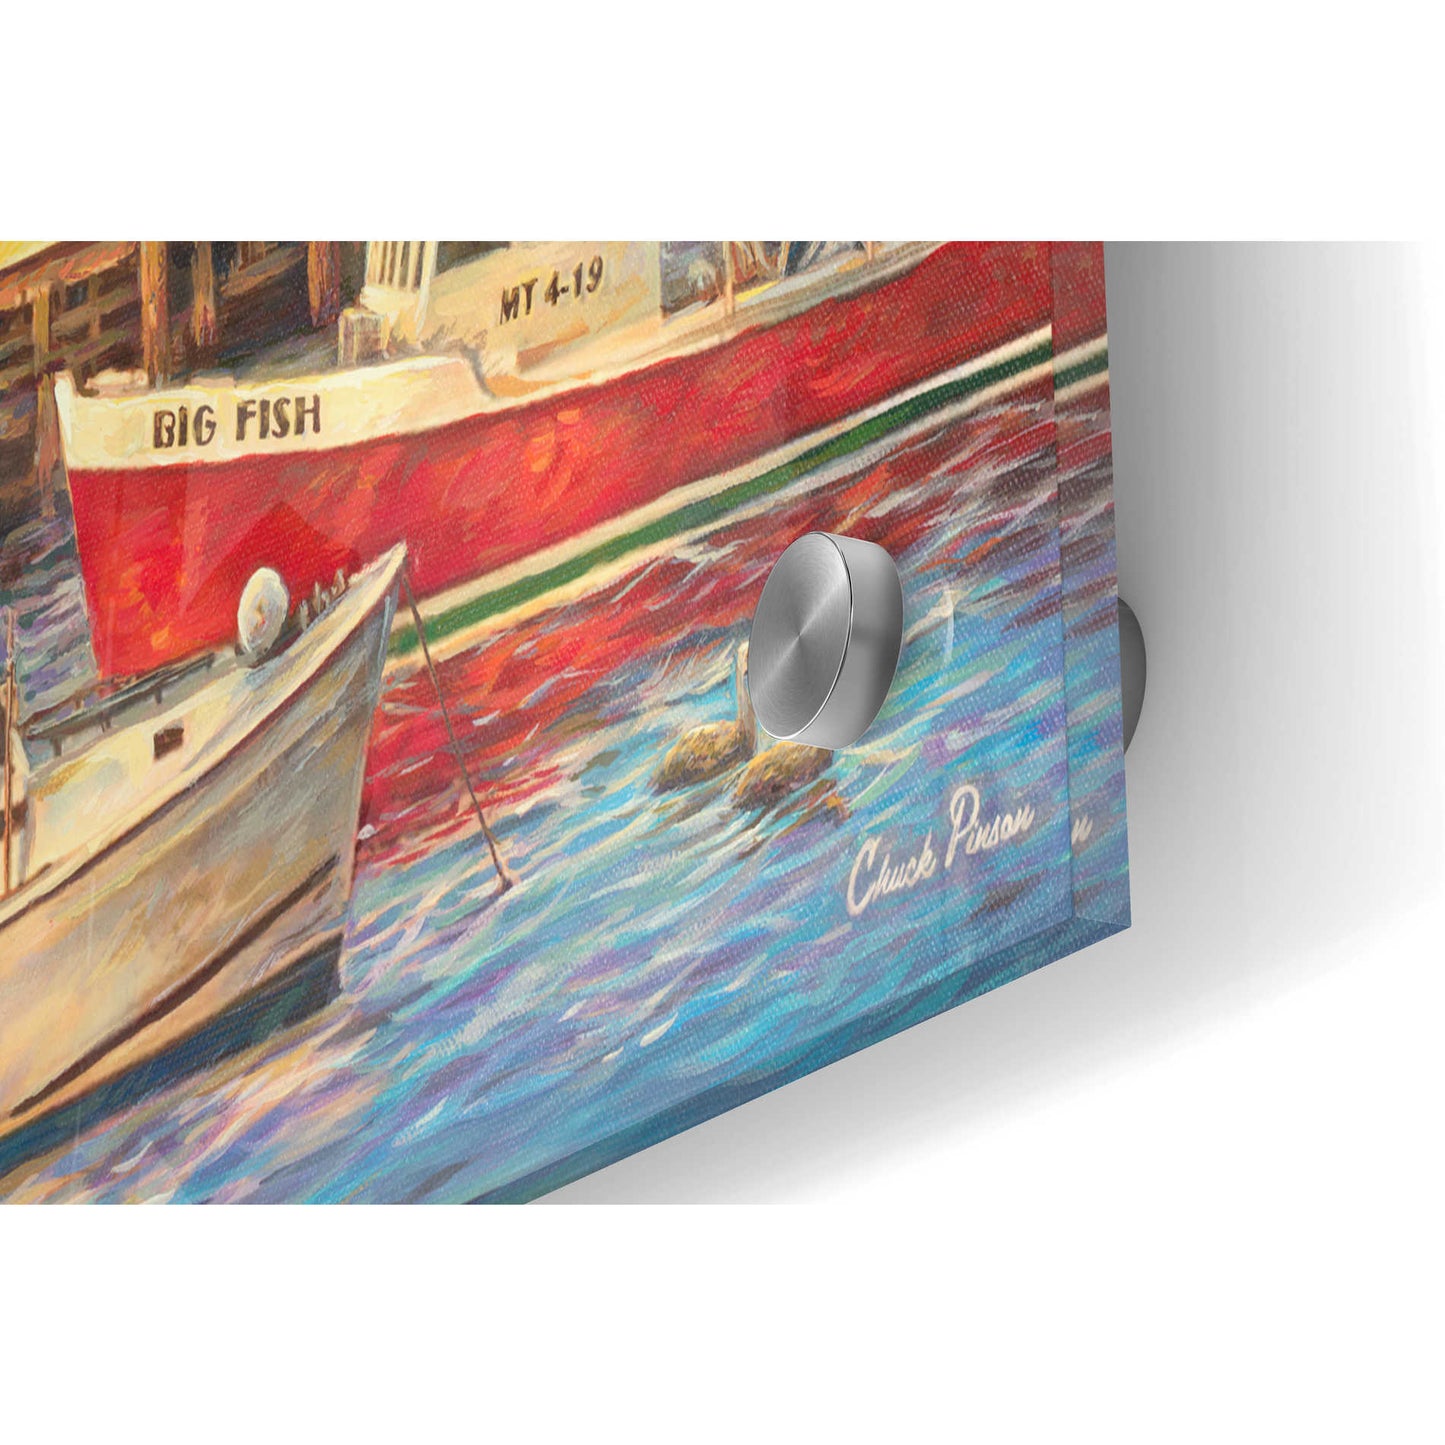 Epic Art 'Good Times Harbor' by Chuck Pinson, Acrylic Glass Wall Art,36x24